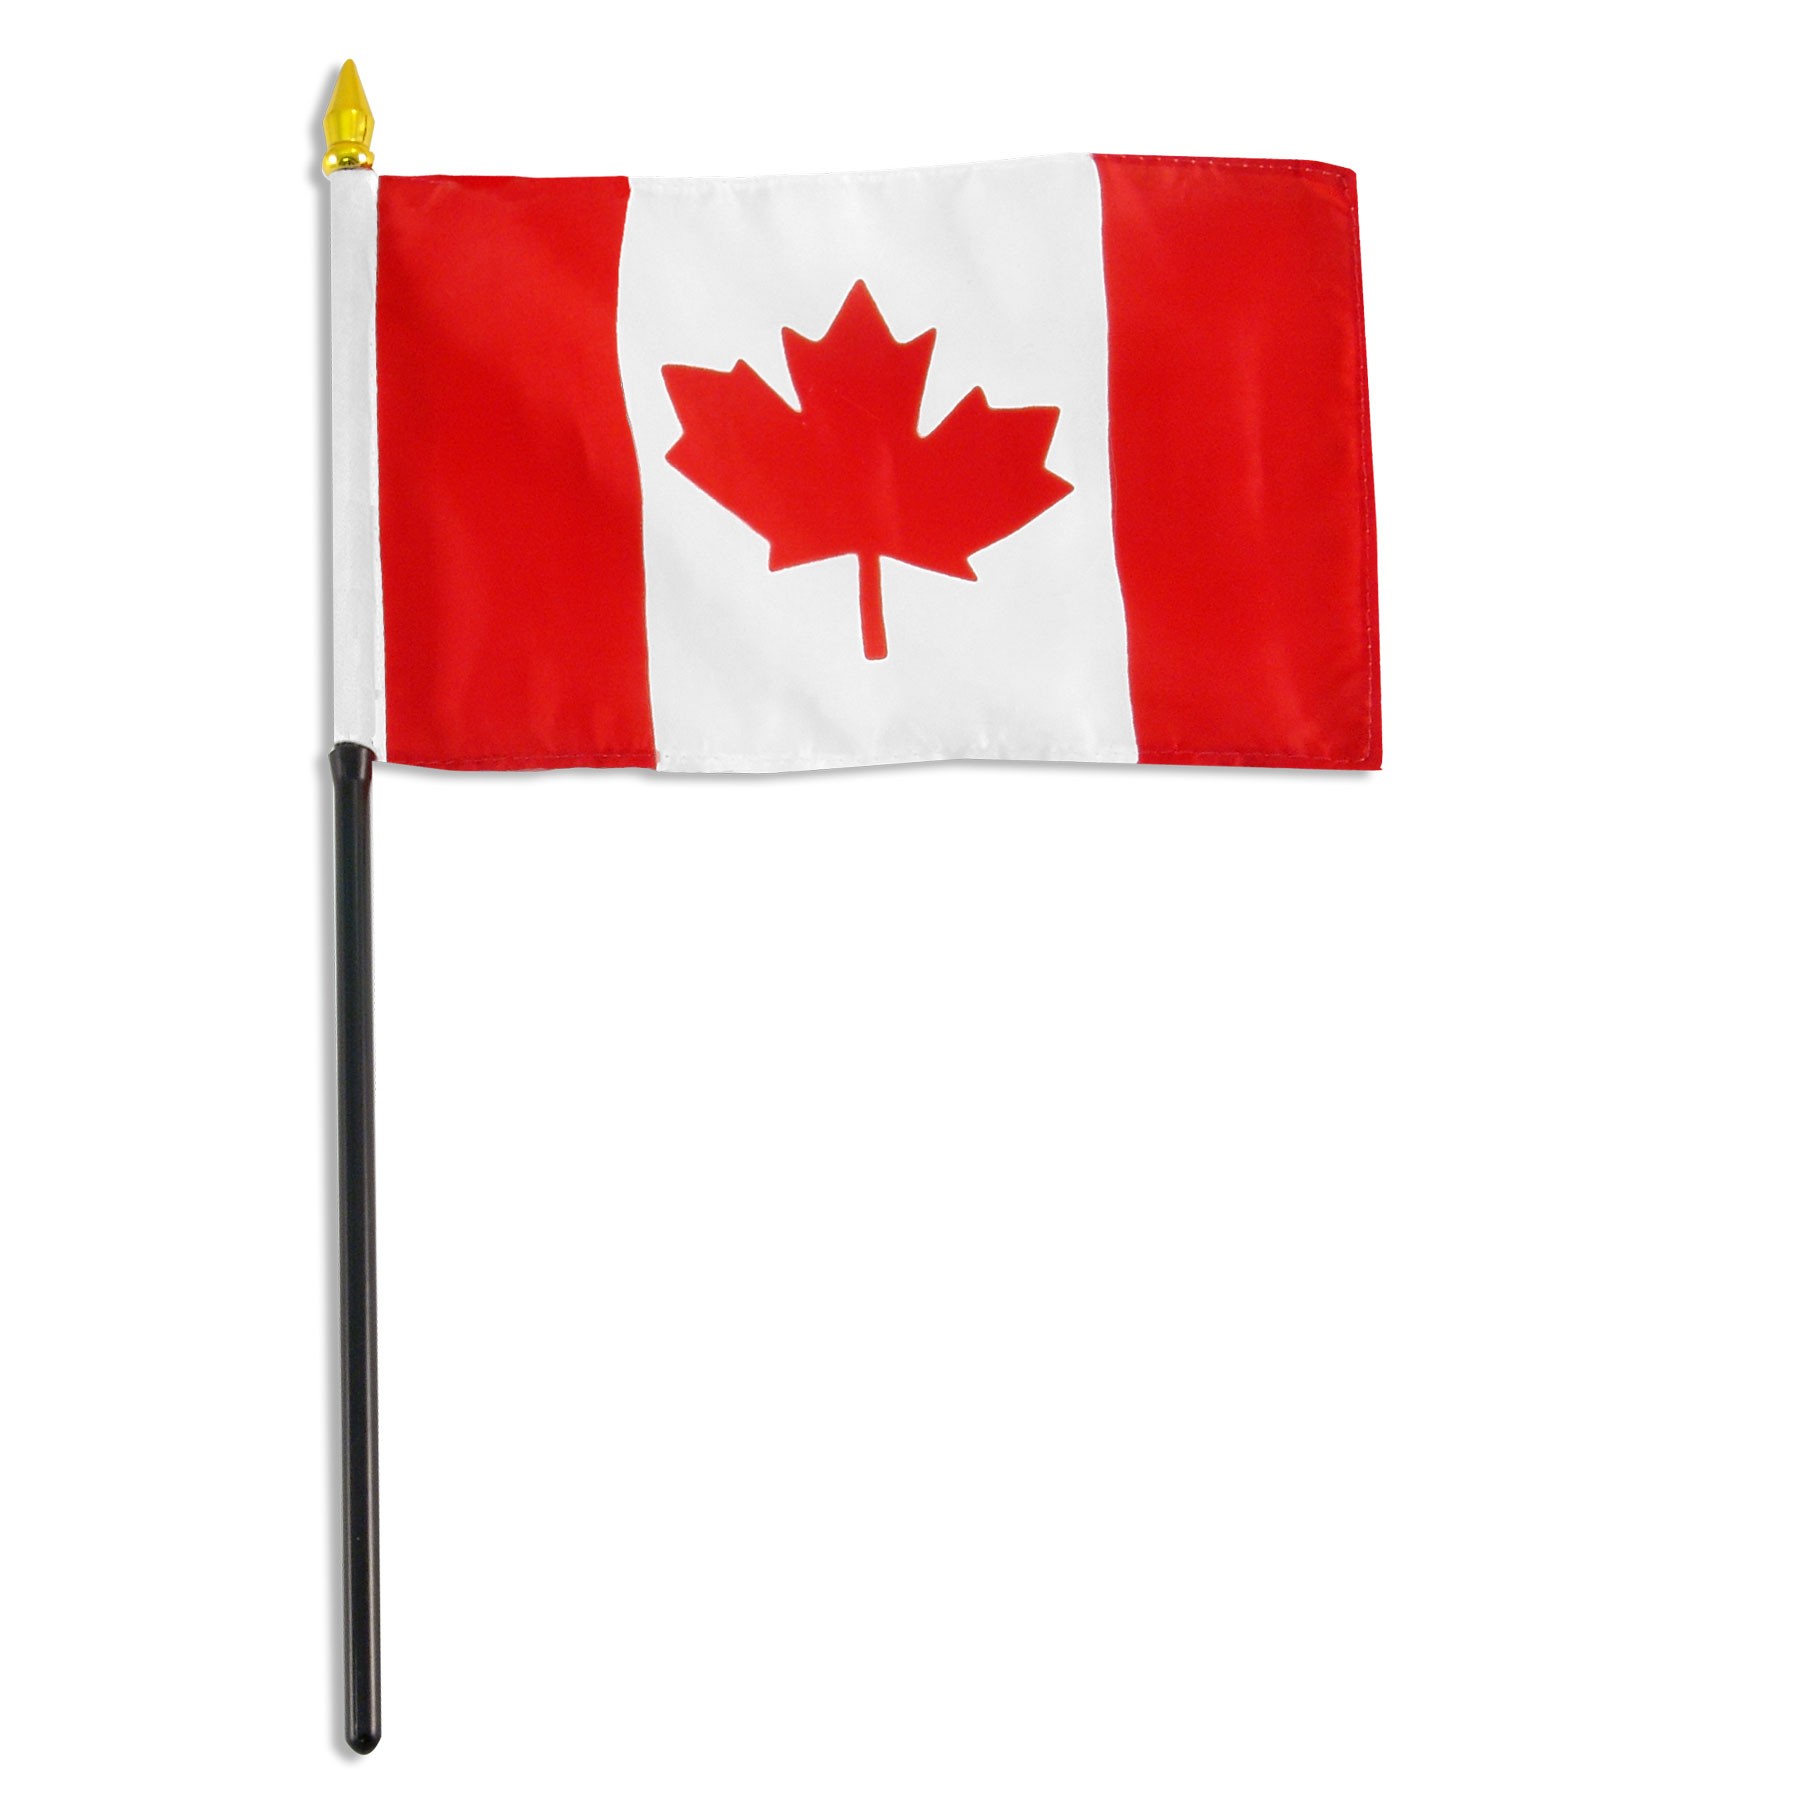 Canadian Flag Clip Art N63 free image.